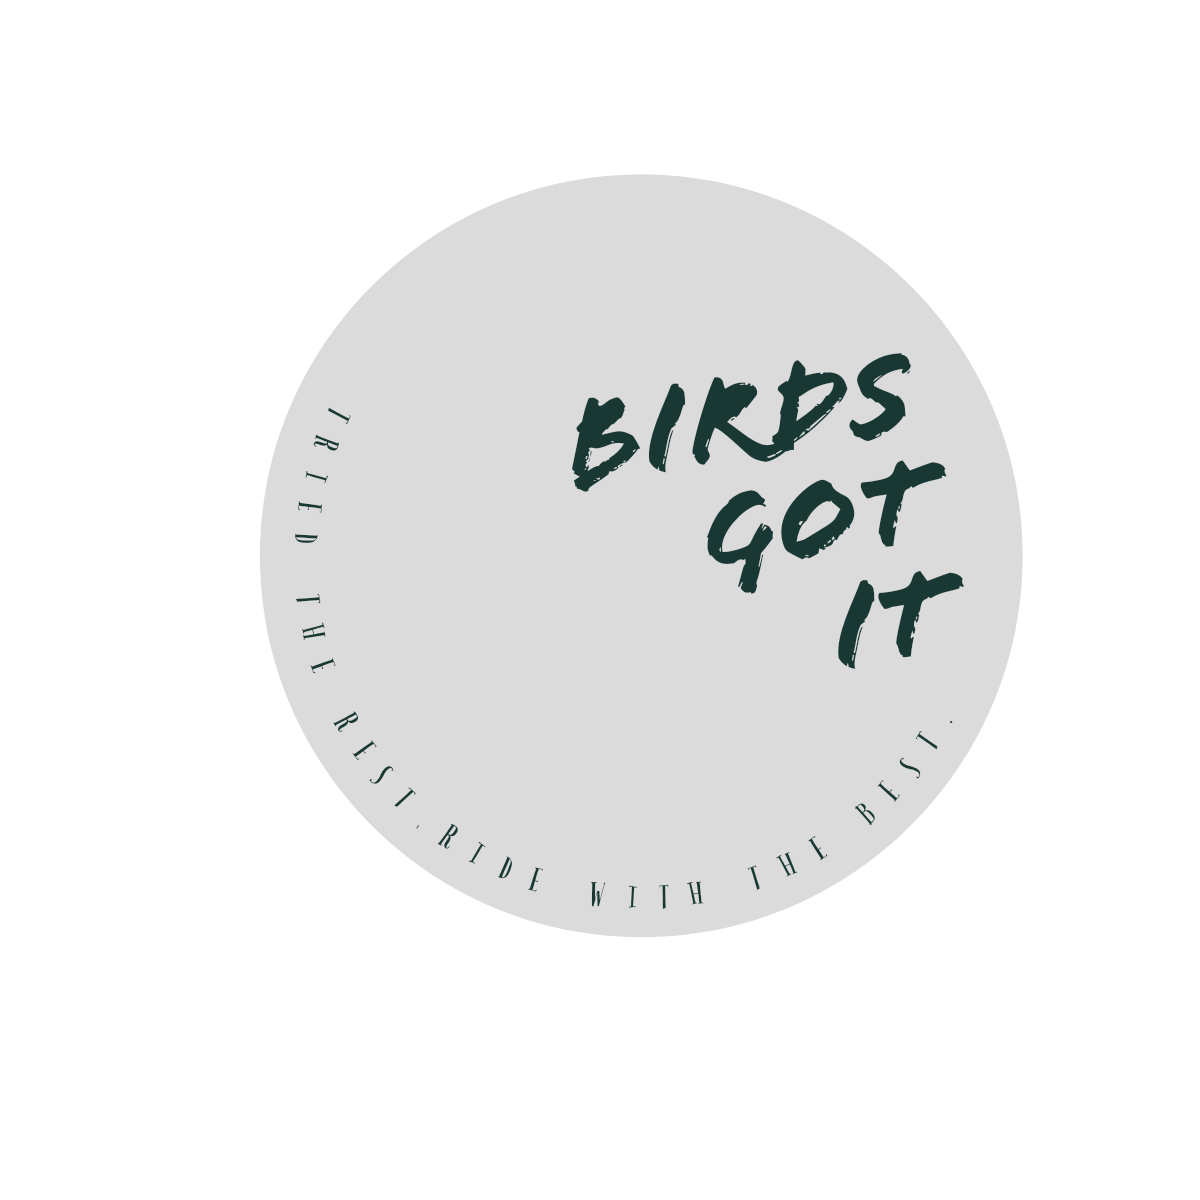 Company logo of Birds-got-it